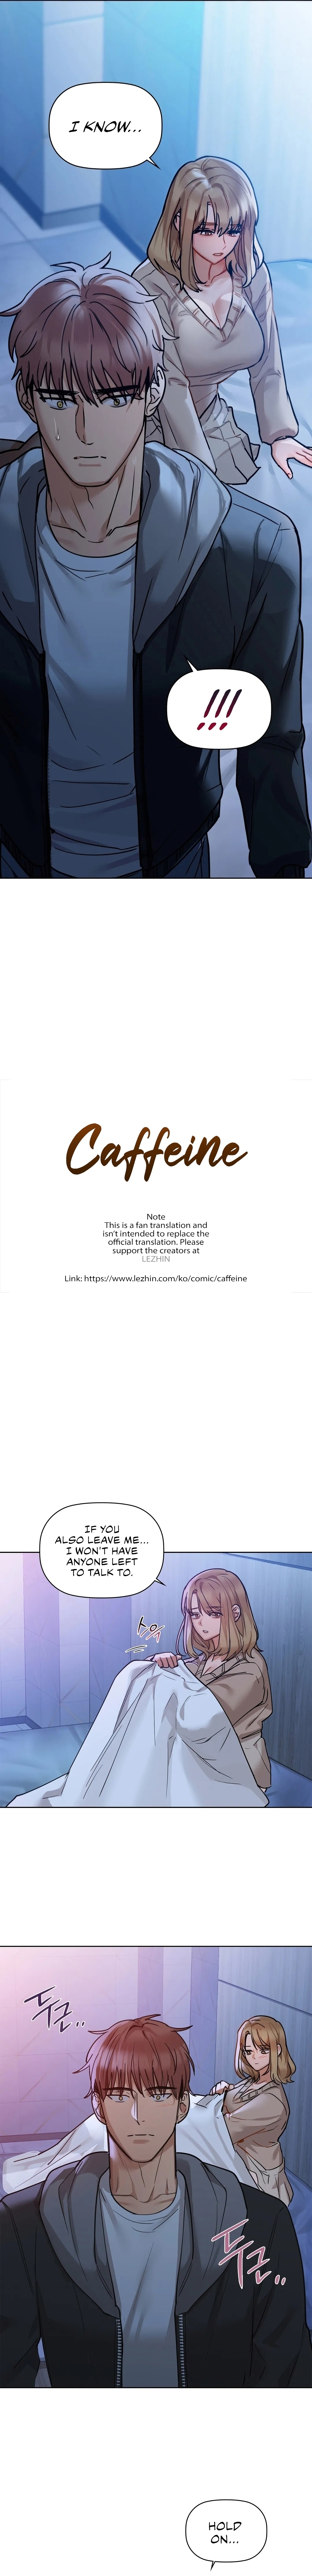 Caffeine - Page 2